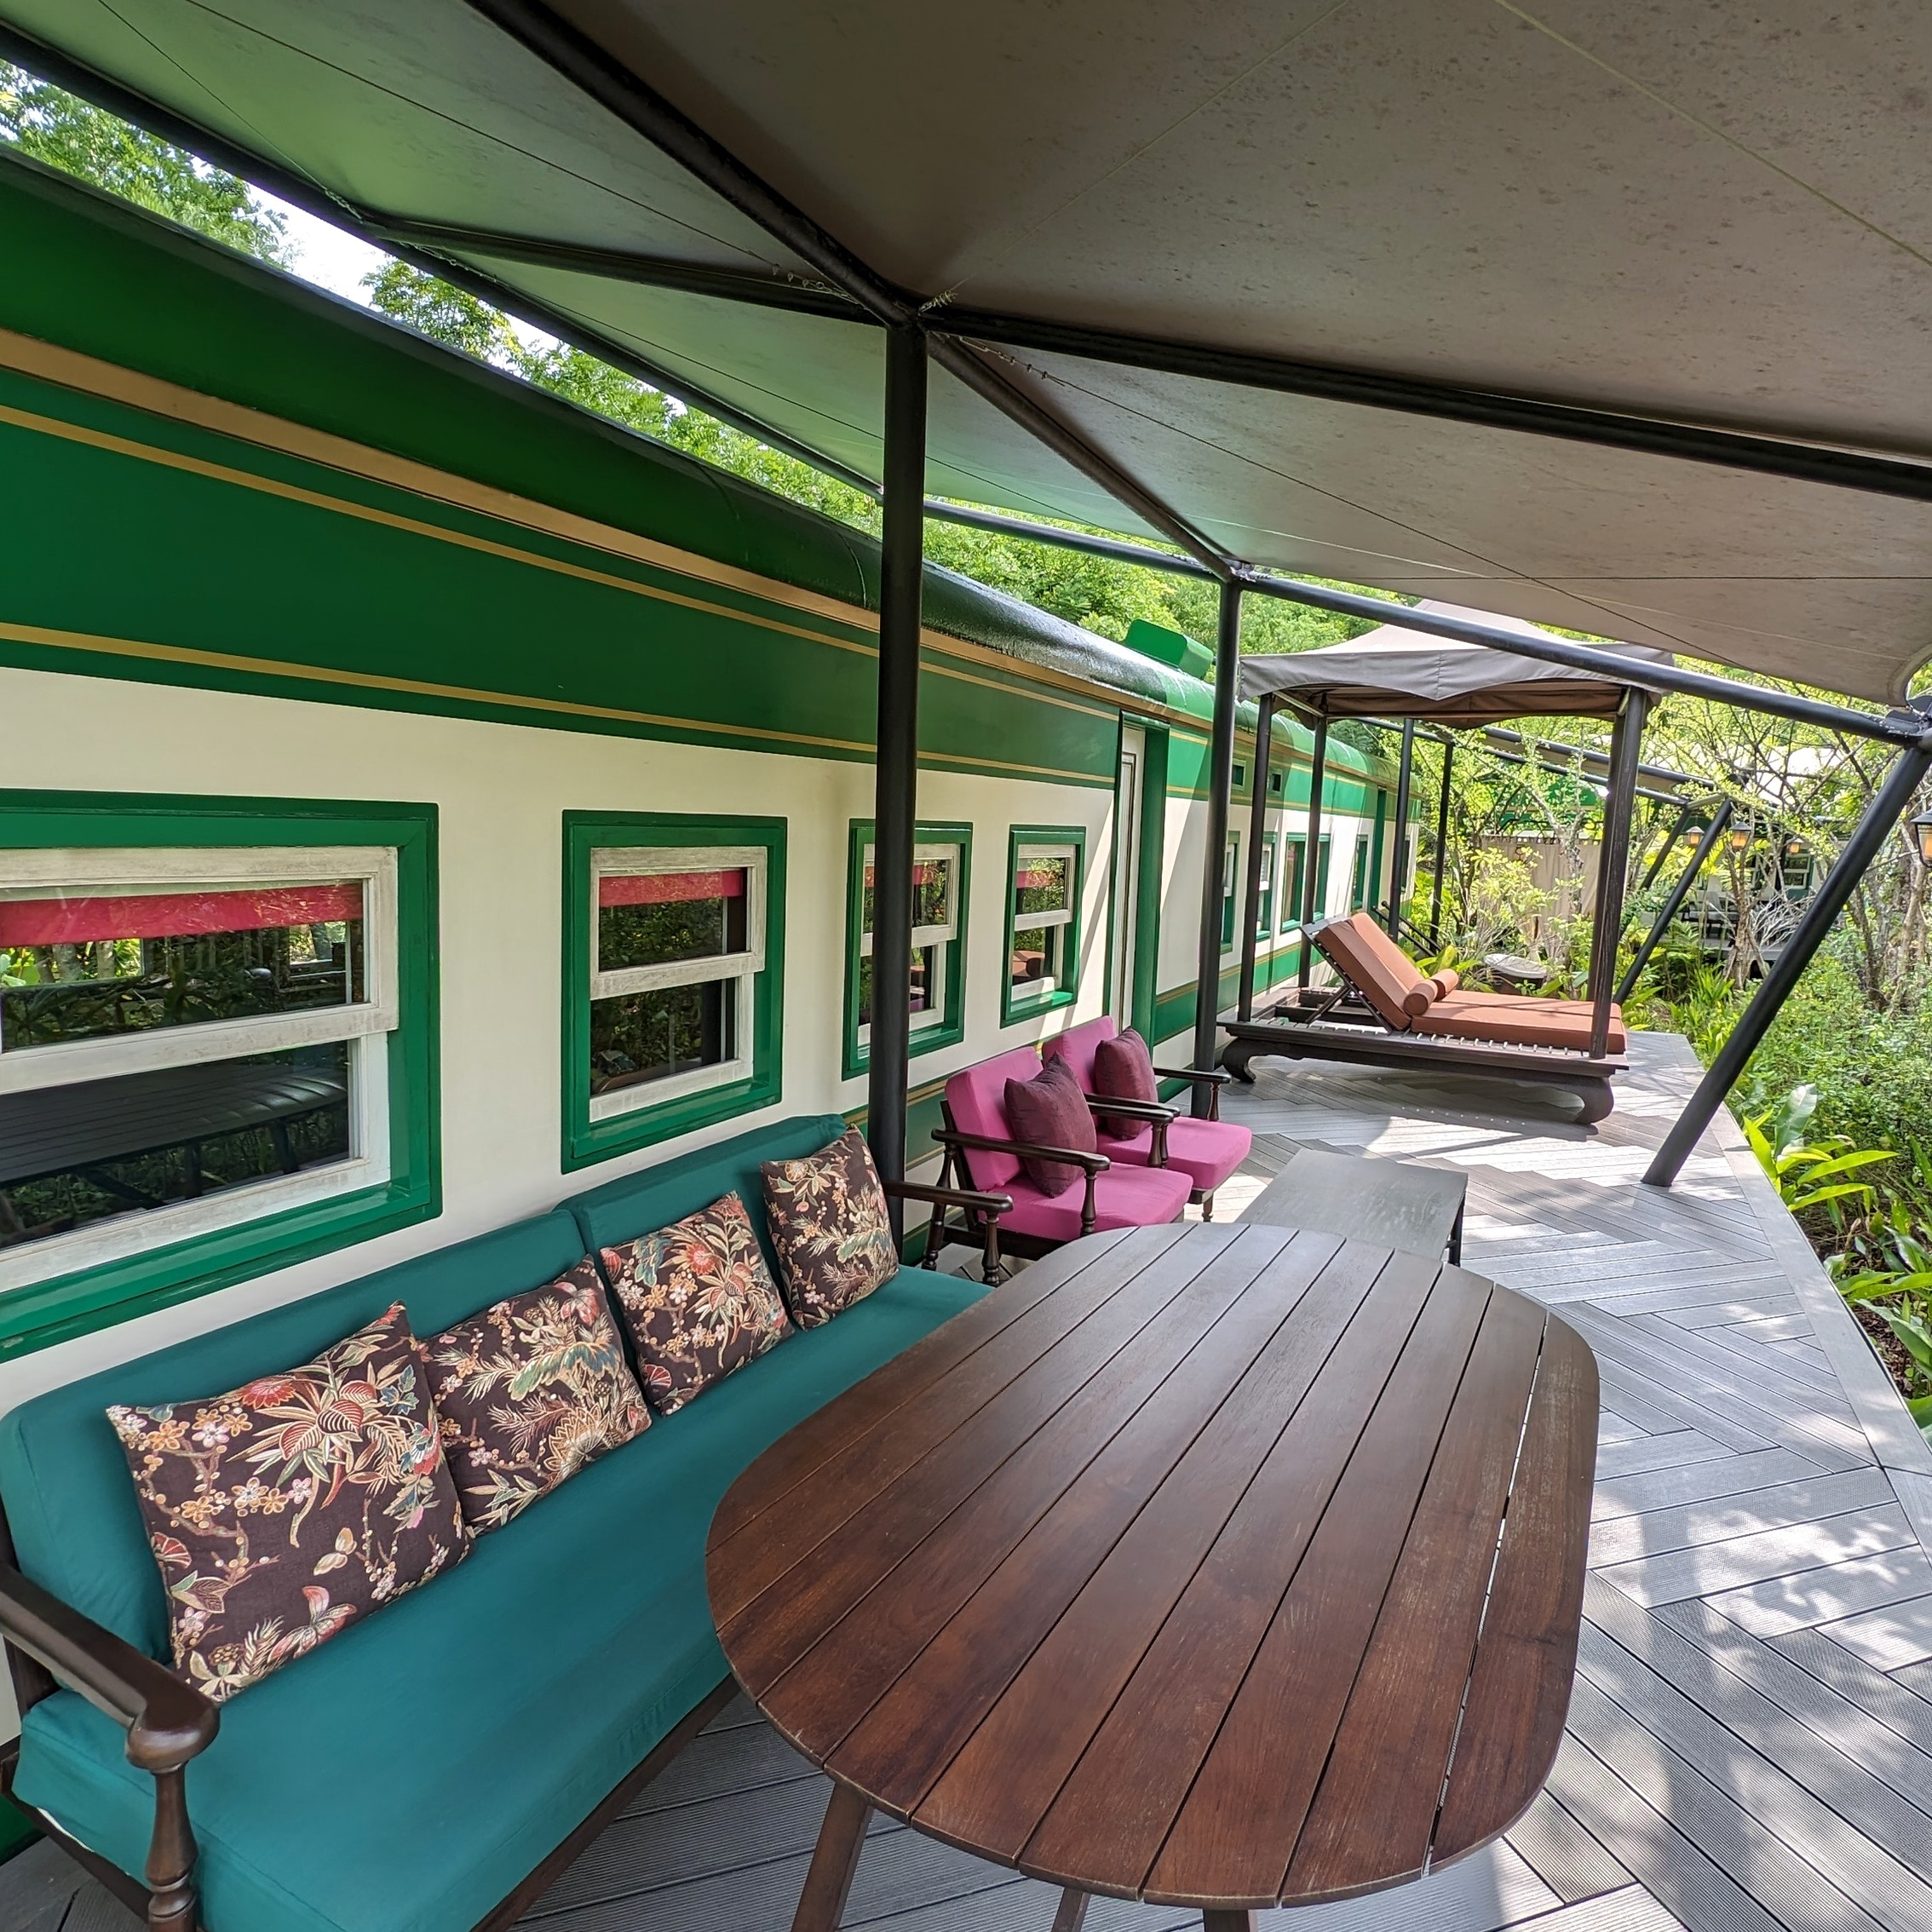 InterContinental Khao Yai Resort Heritage Railcar 1 Bedroom Villa Outdoor Living Area